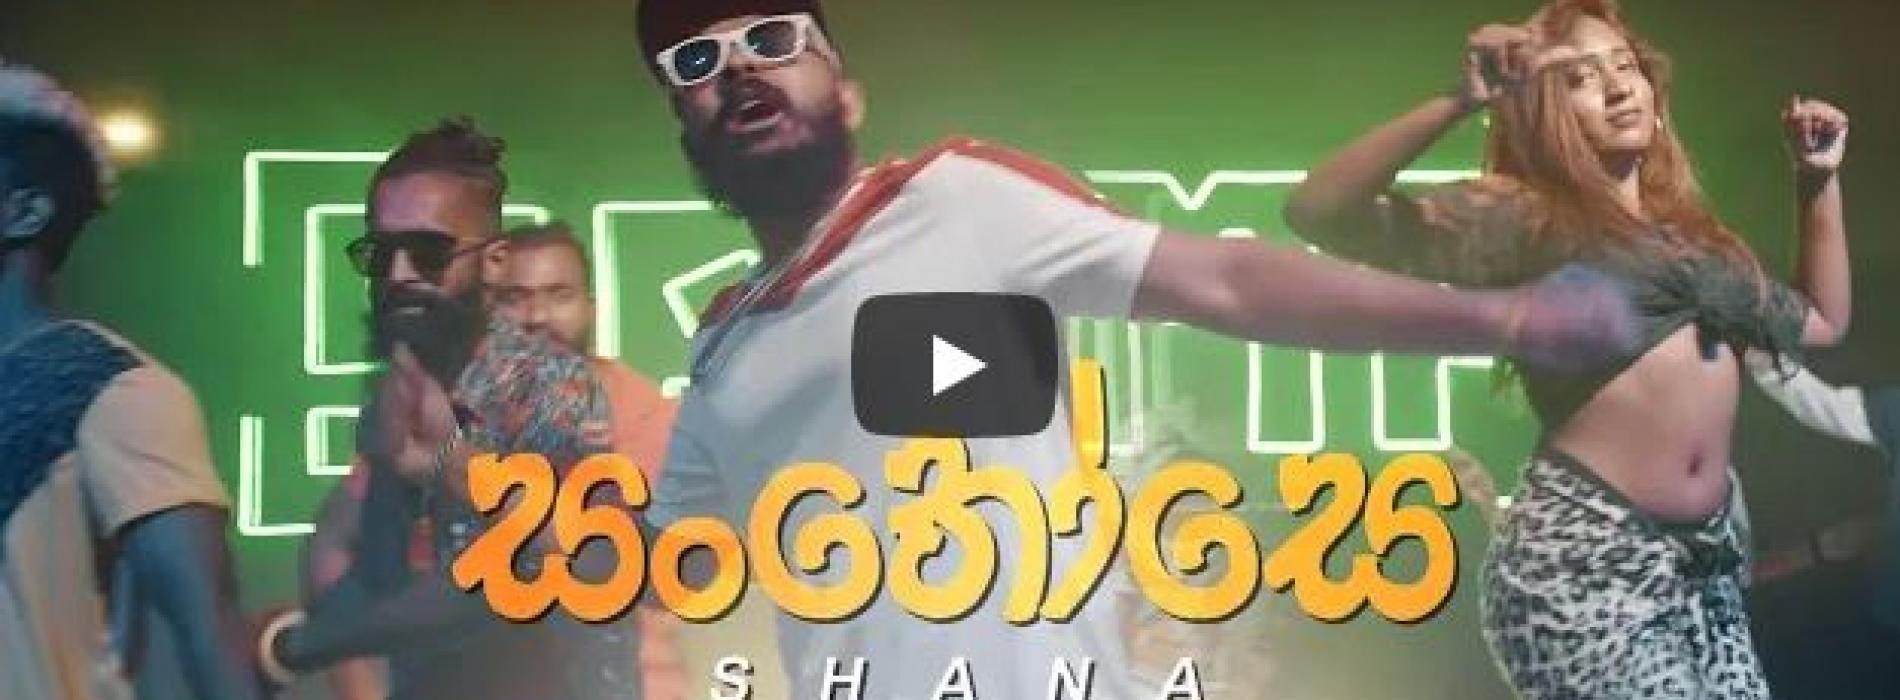 New Music : Shan Putha – Santhosey (සංතෝසෙ) | Official Music Video